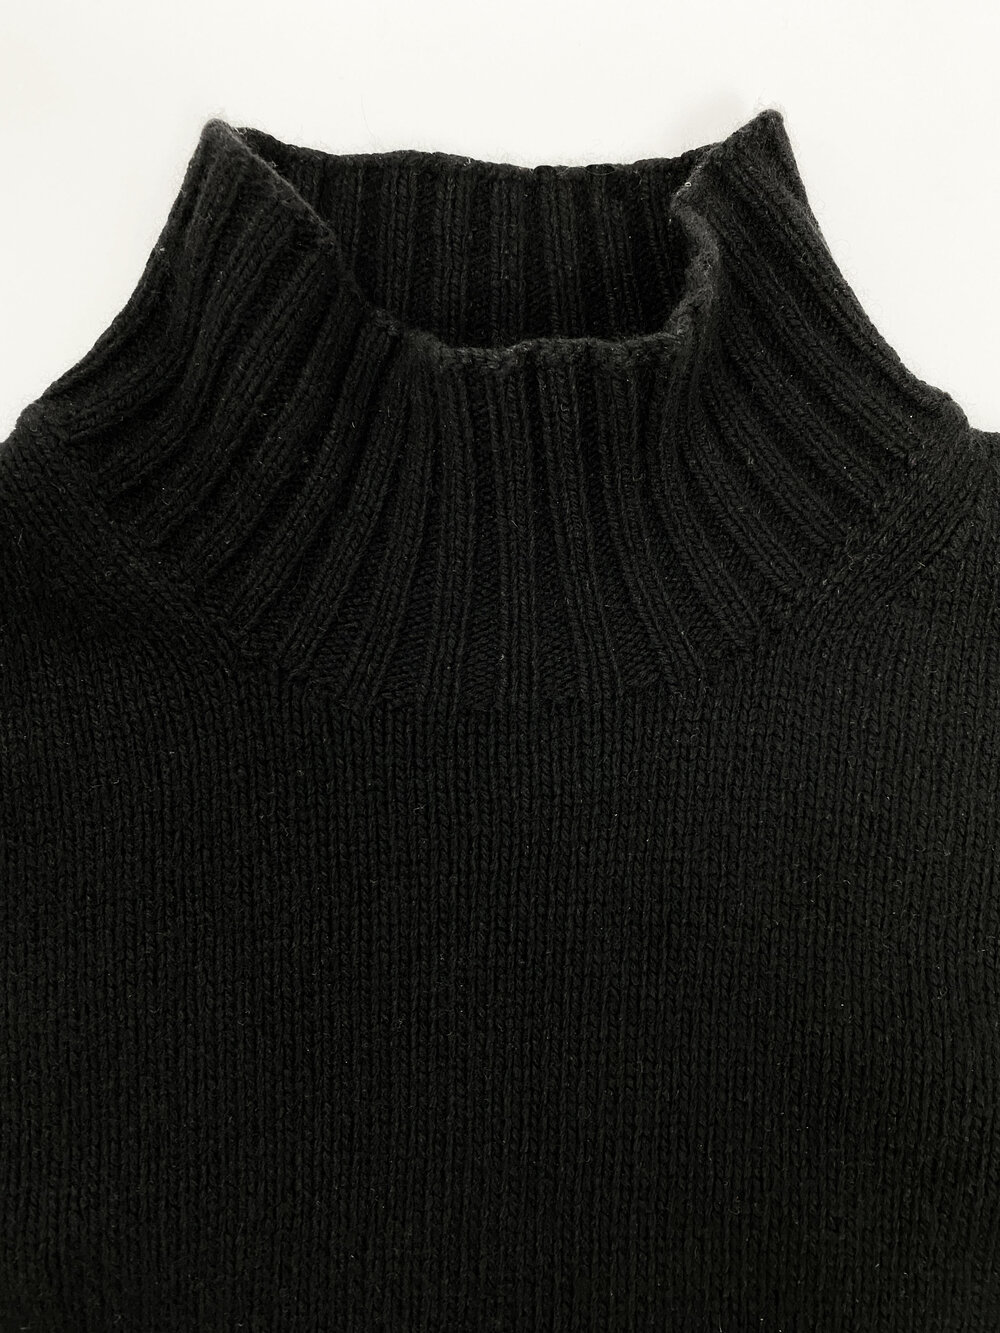 Hermes black cashmere sweater — JAMES VELORIA